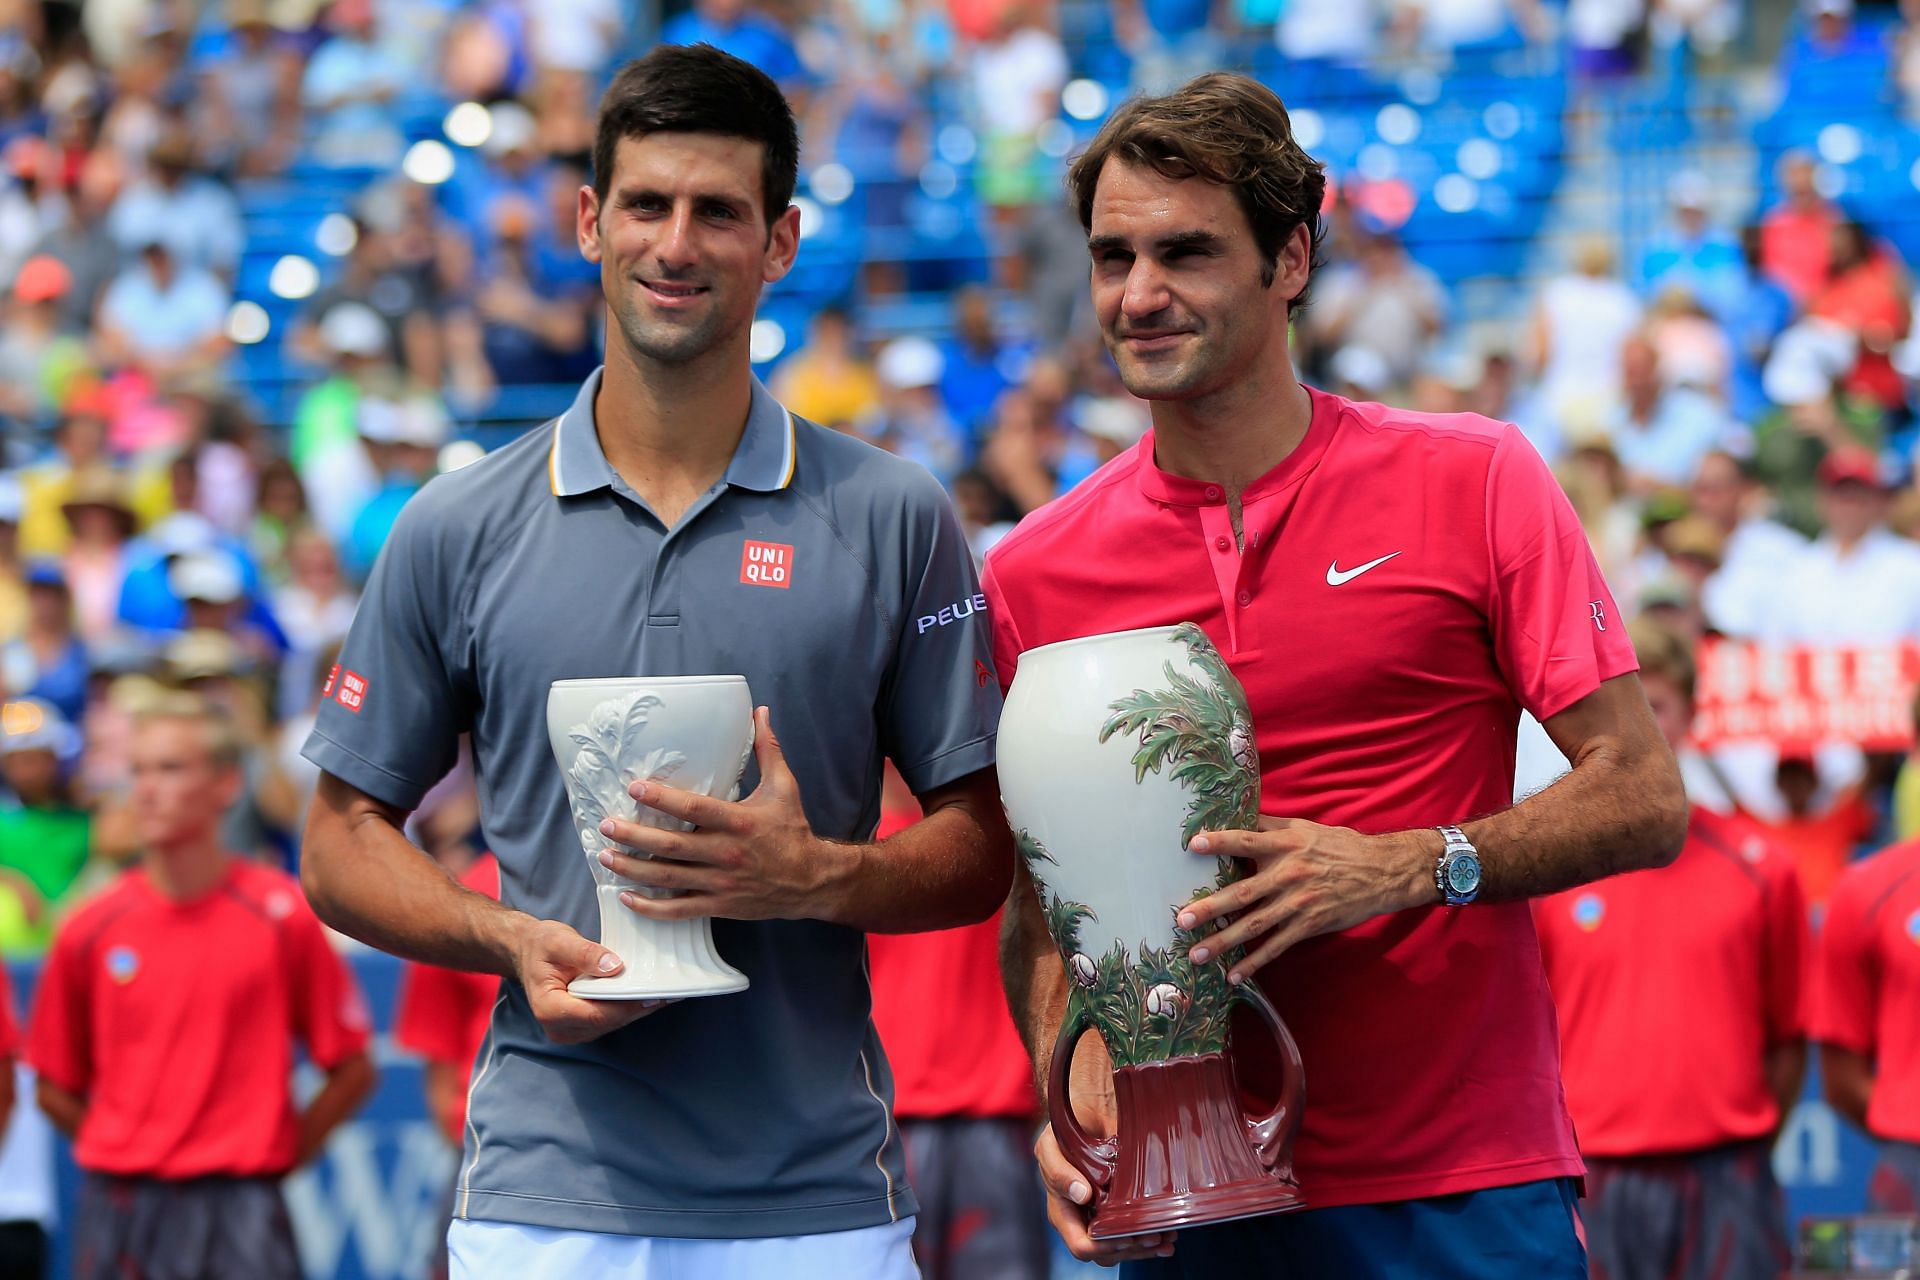 Federer has beaten Djokovic thrice in Cincinnati